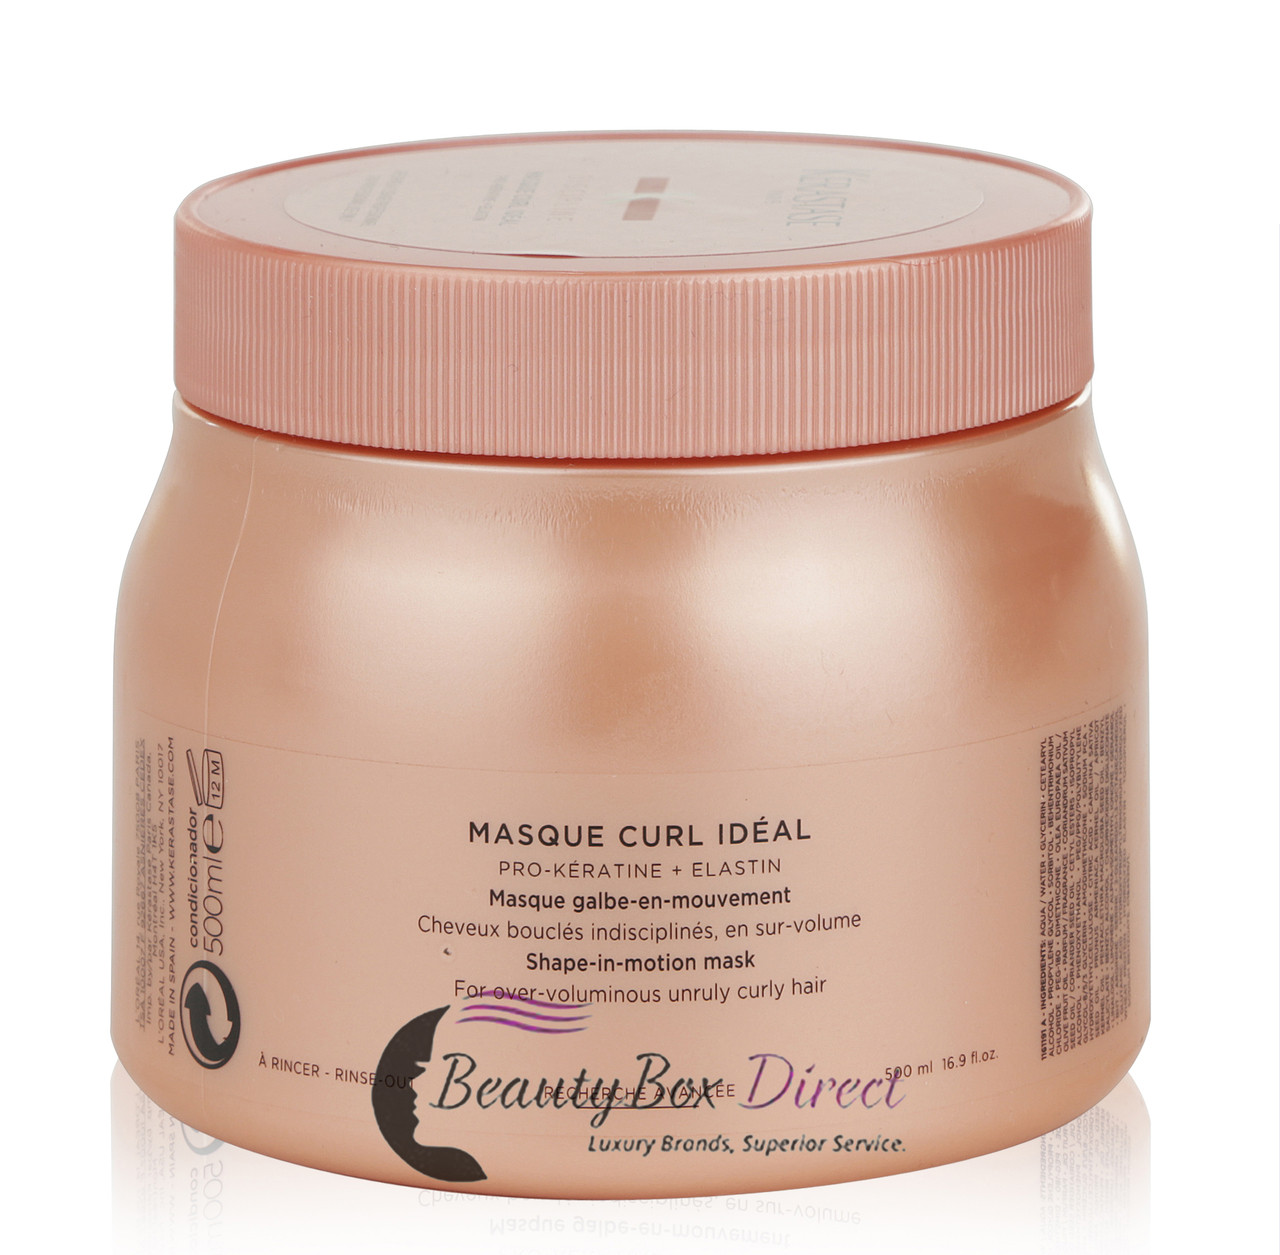 Kerastase Discipline Masque Curl Ideal, 16.9 oz. - BeautyBox Direct